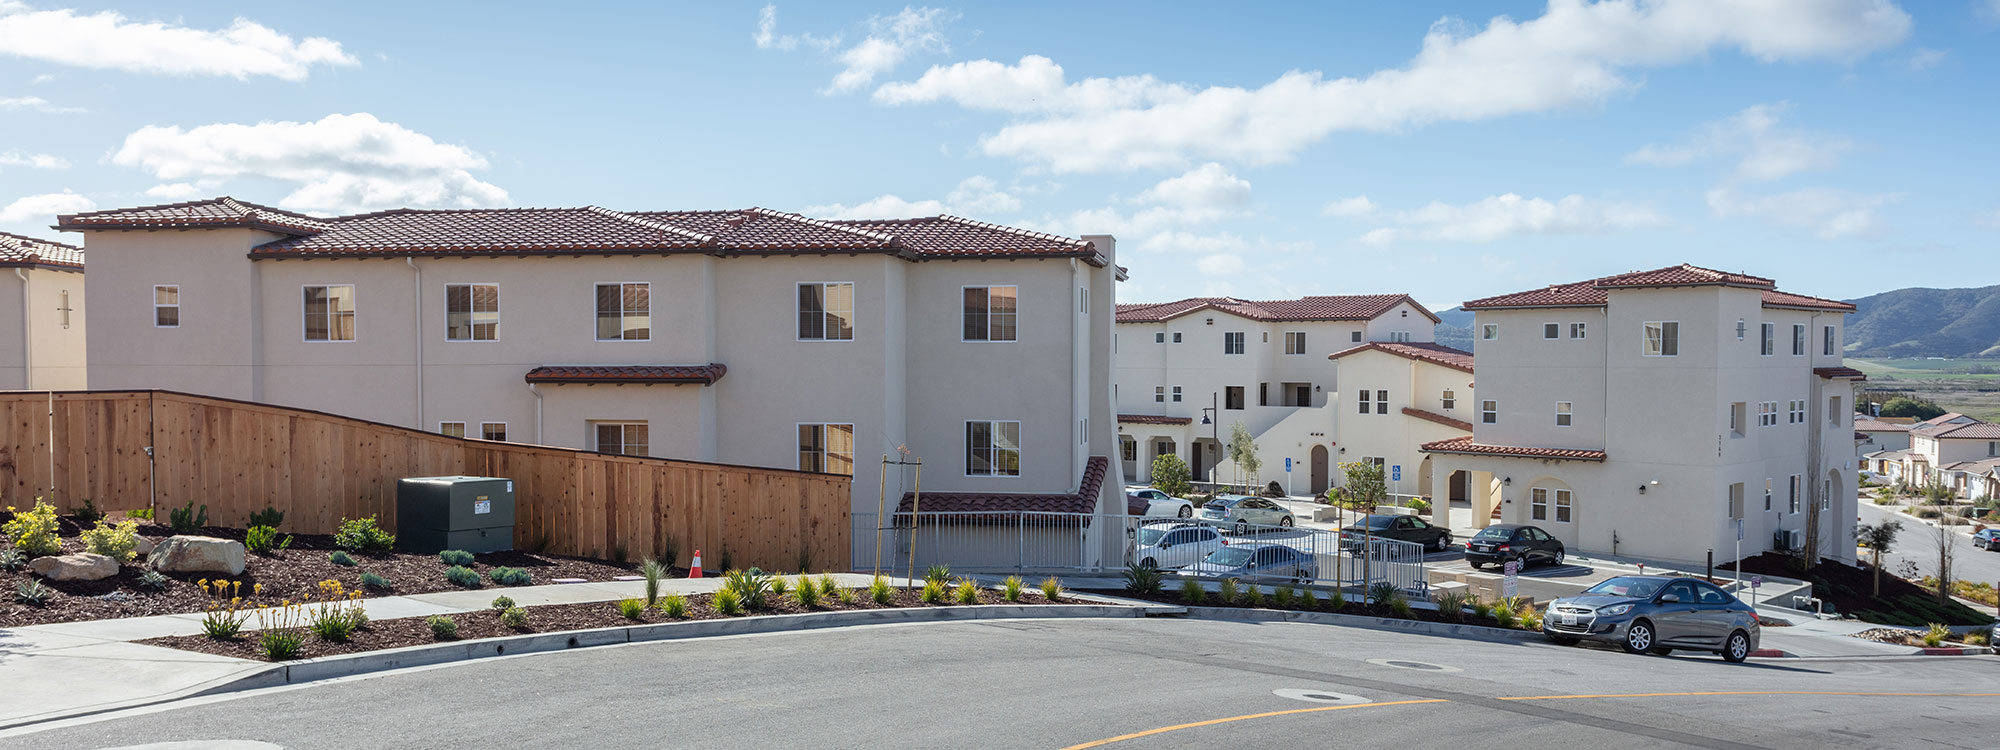 San Luis Obispo County Best Construction Company - Courtyard at Sierra Meadows Apartment Building Builder - JW Design & Construction